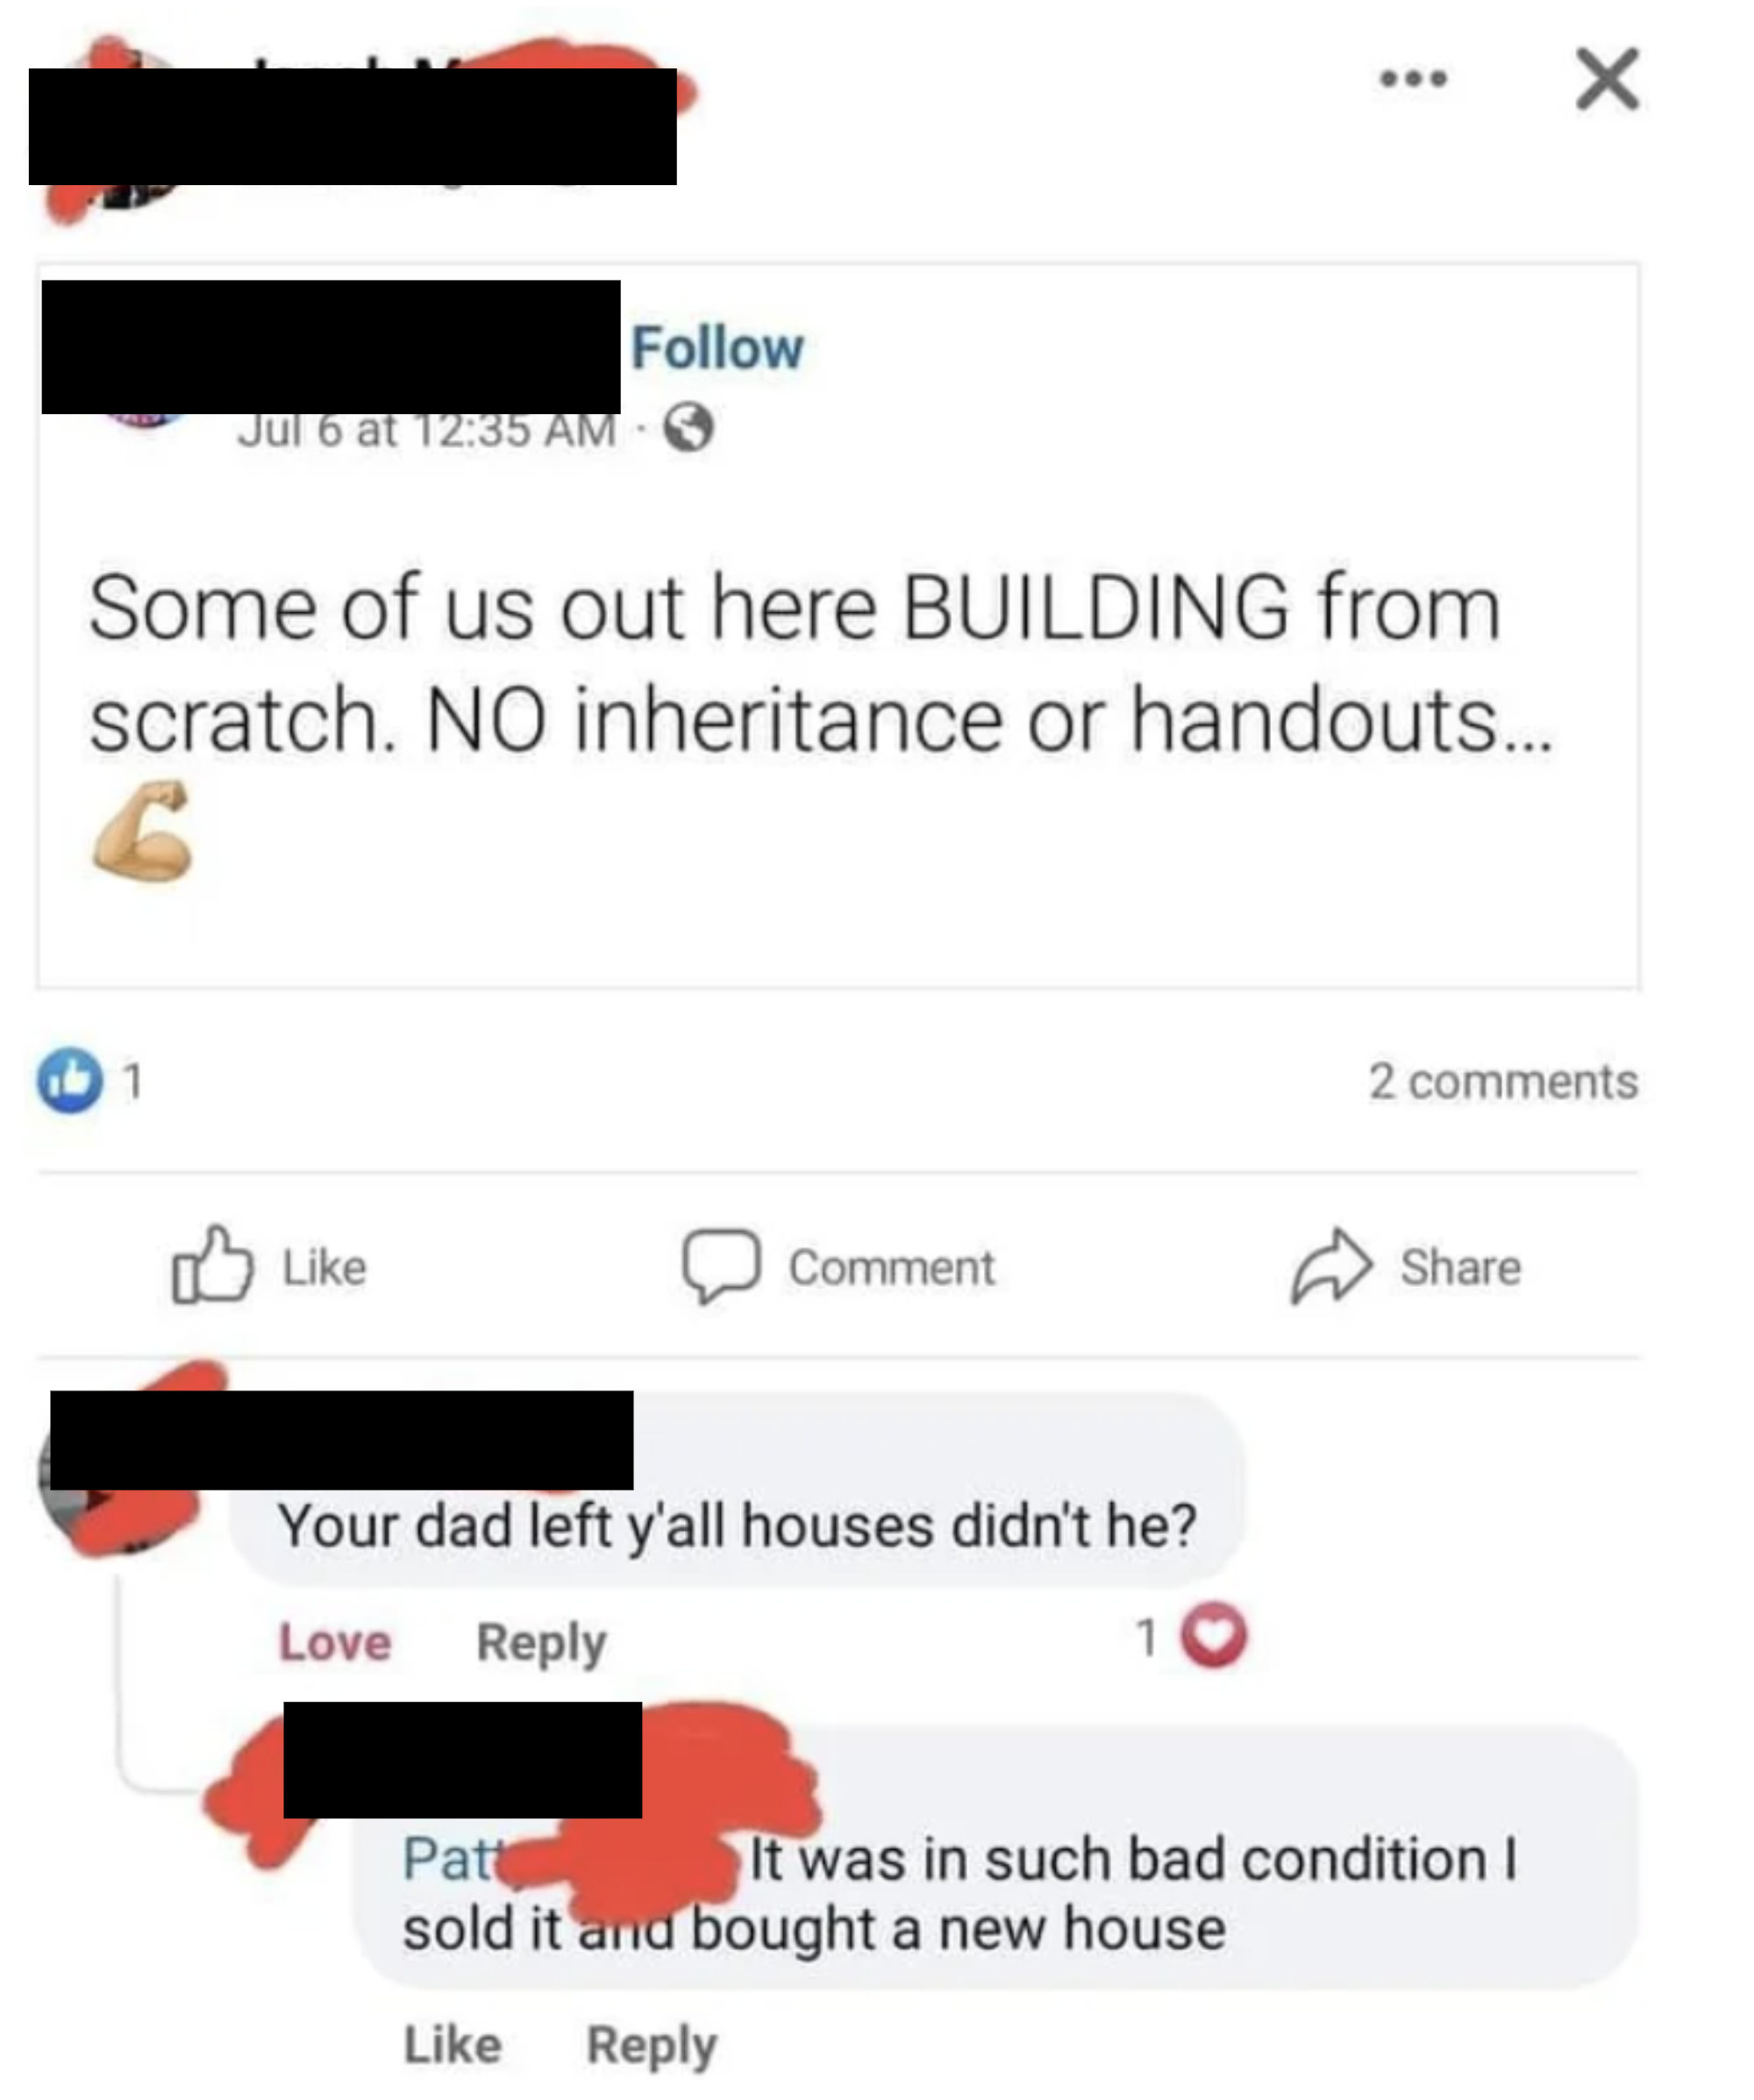 Screenshot of Facebook comments